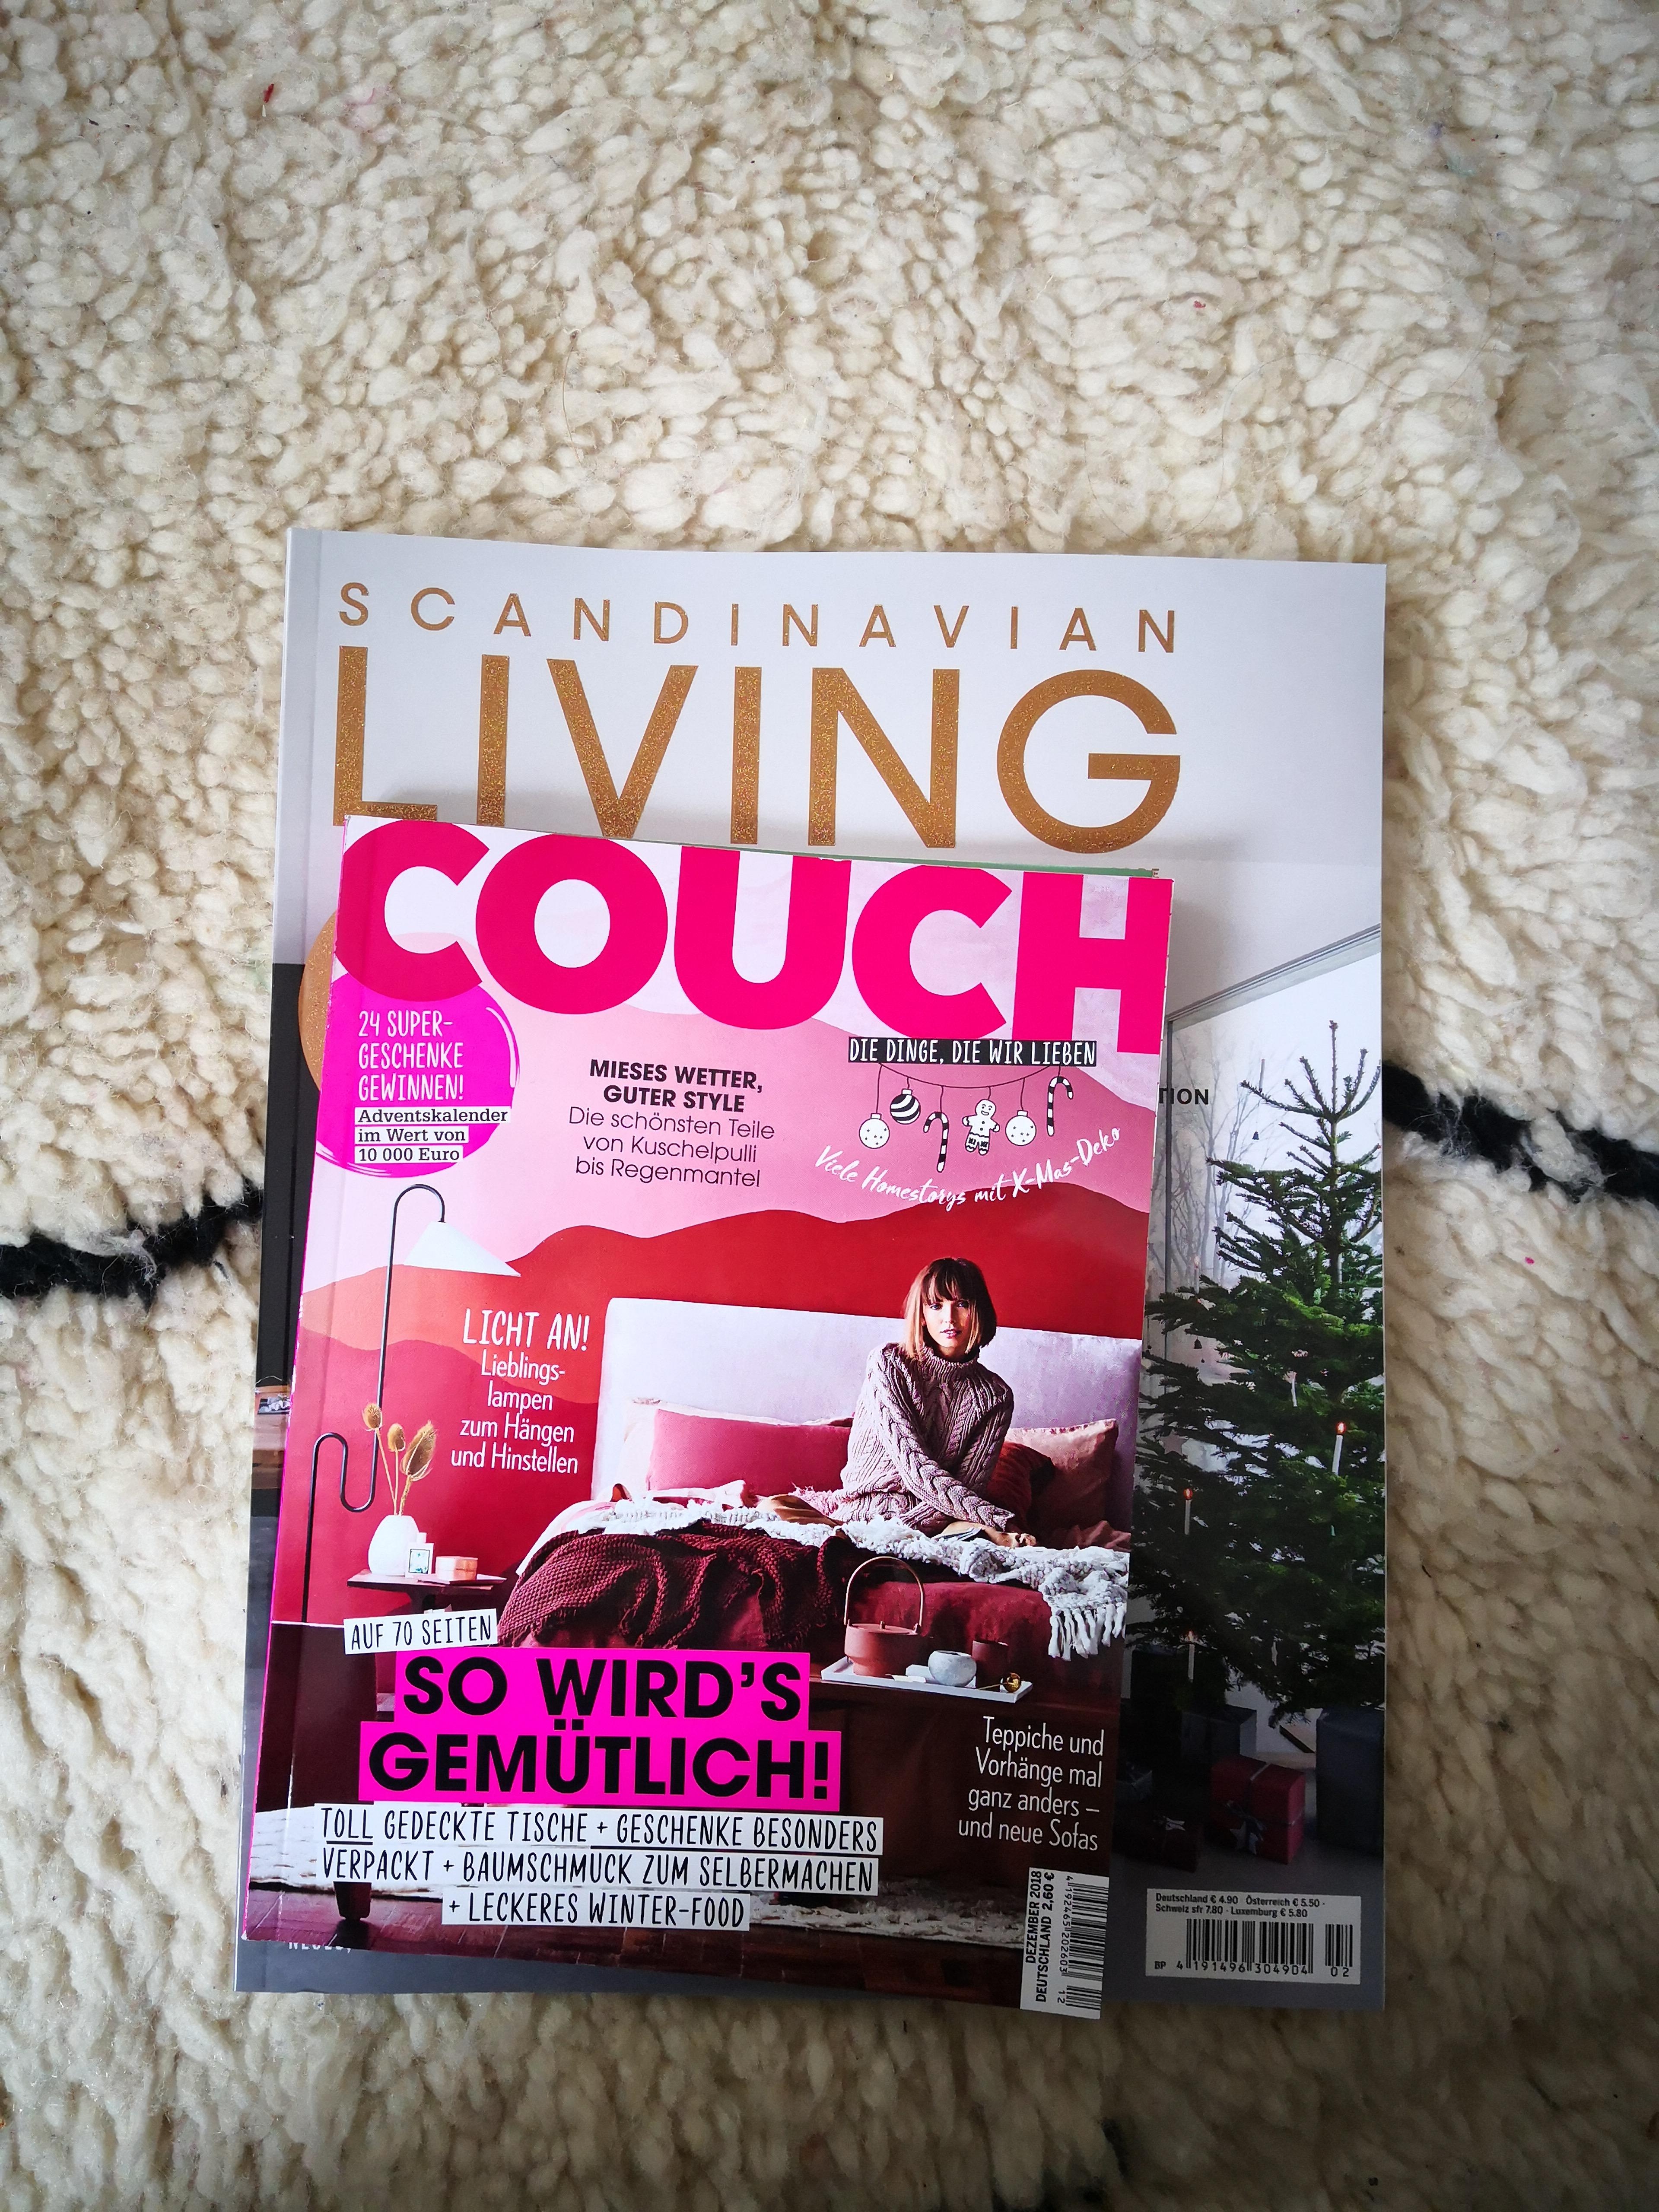 Ergattert 😊
#couchmagazin #inspiration #interior 